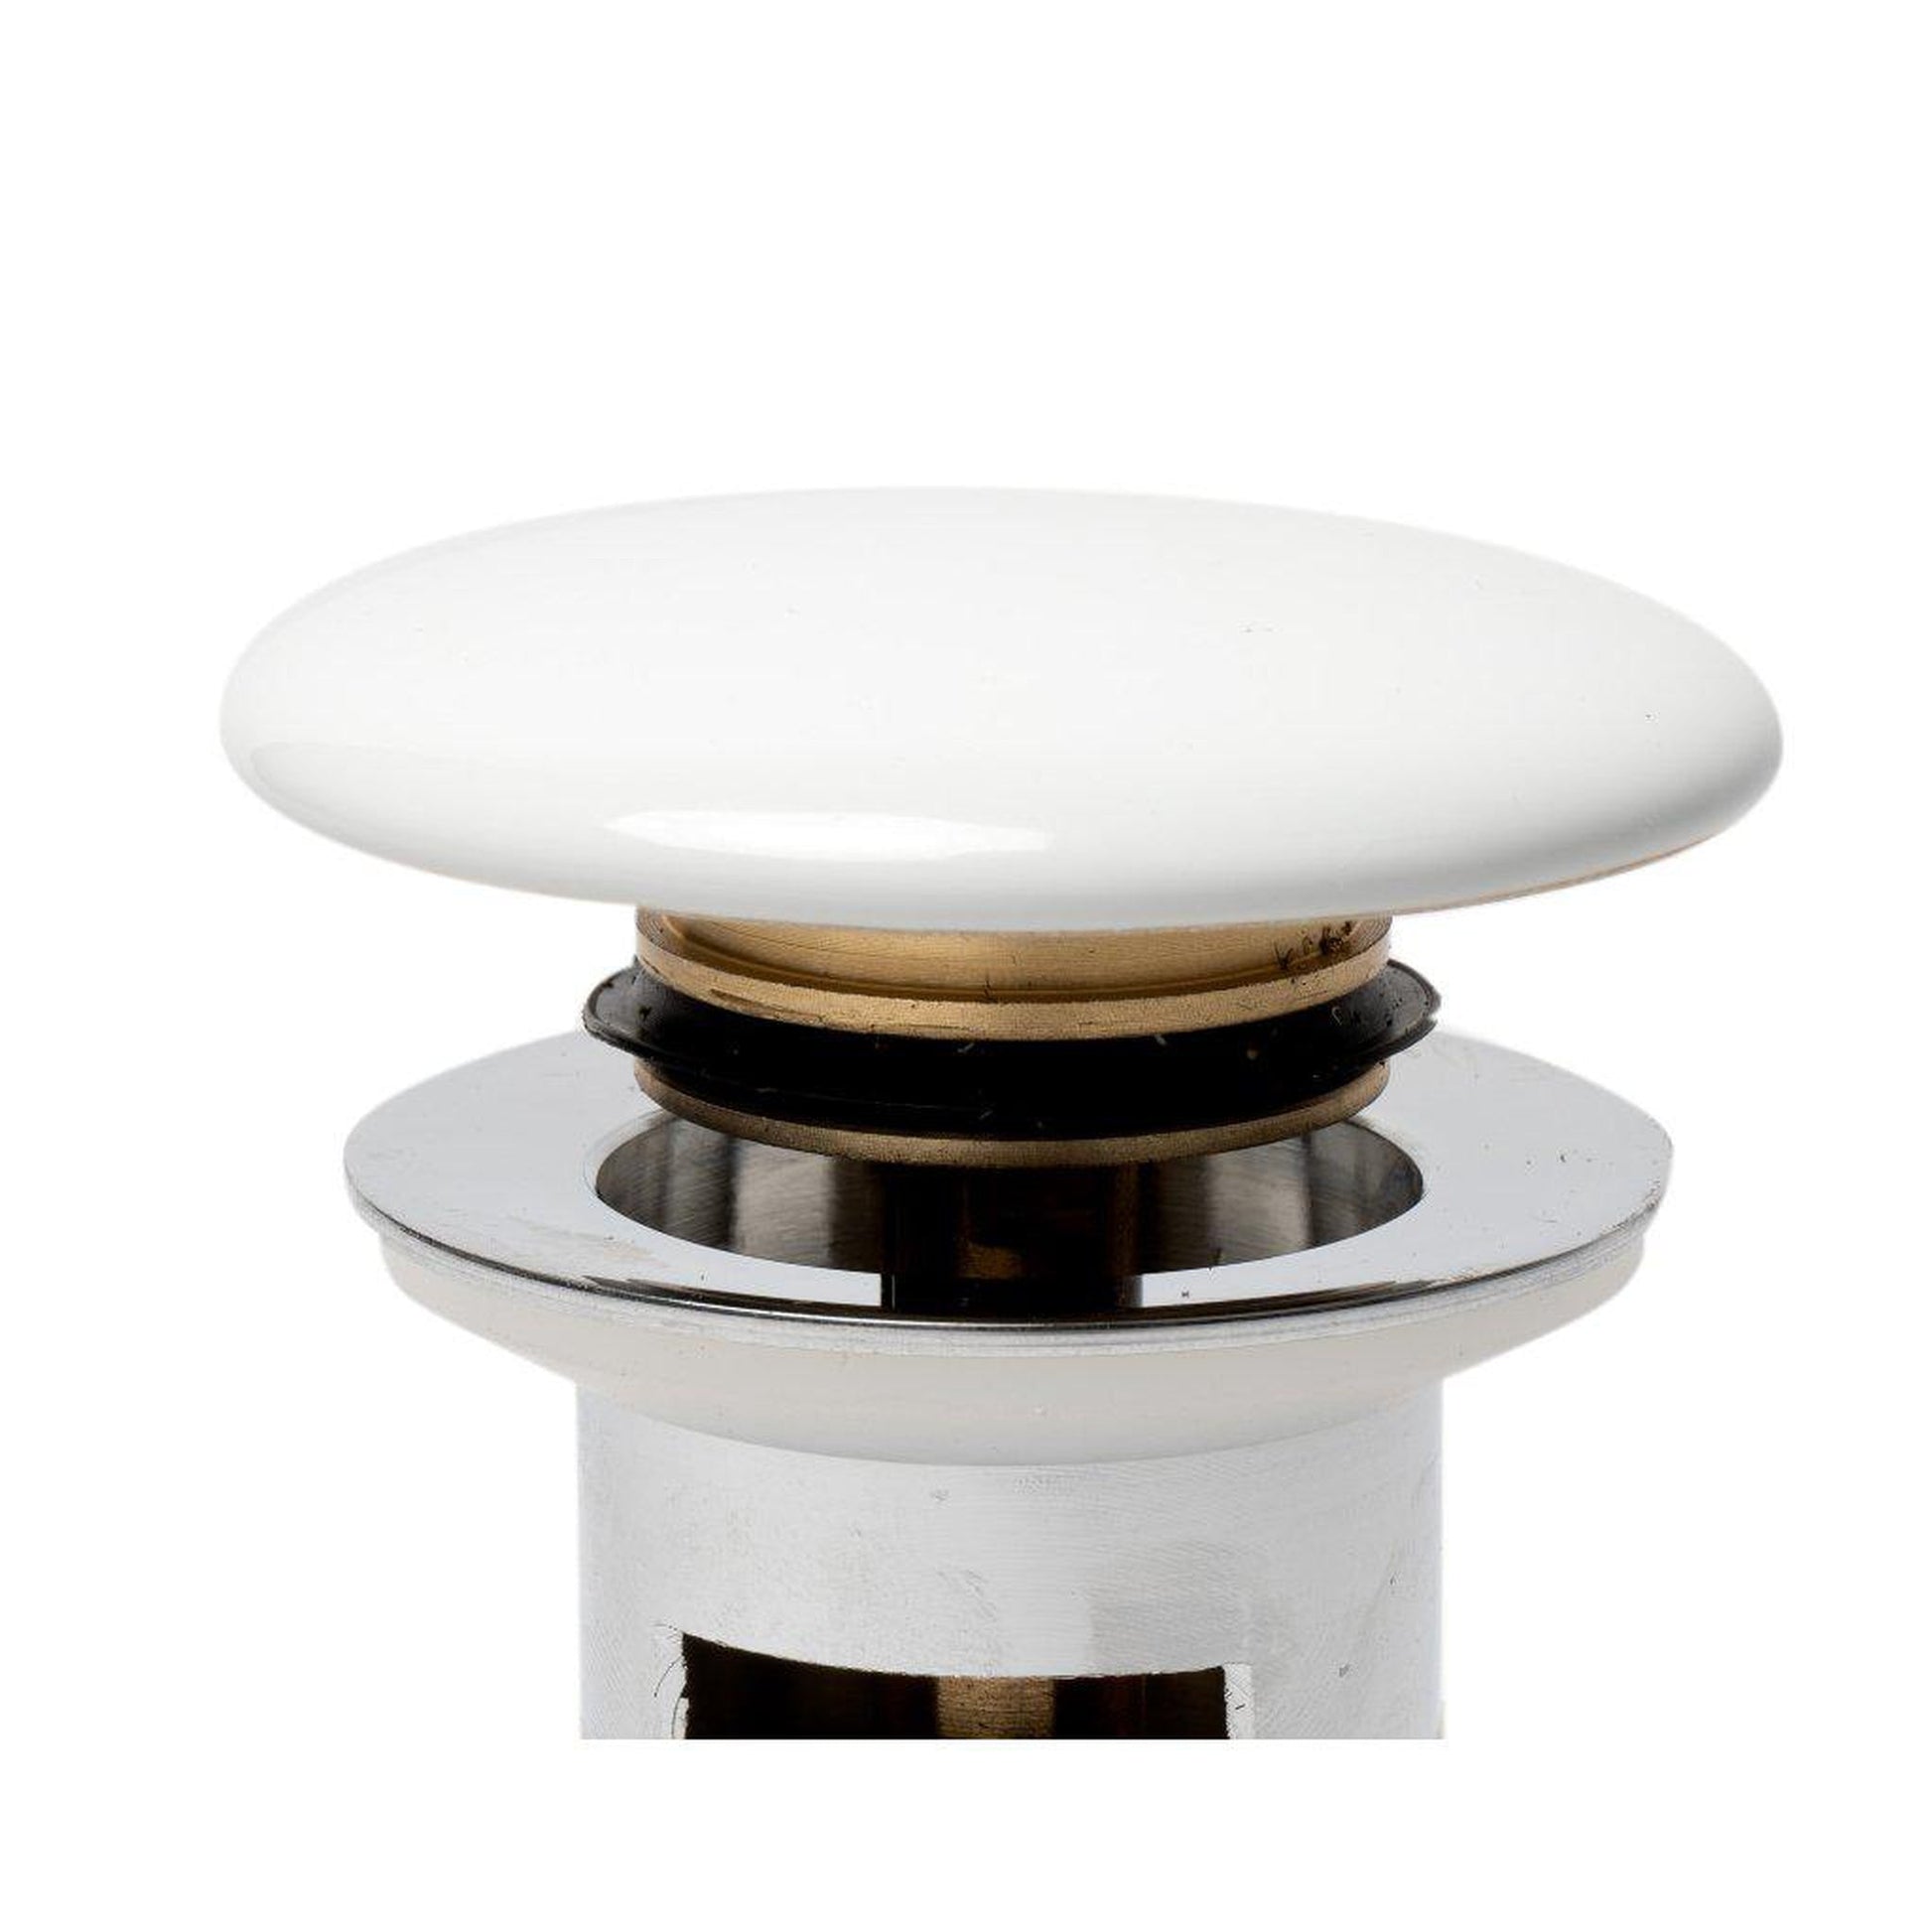 ALFI Brand AB8056-W White Ceramic Mushroom Top Pop Up Bathroom Sink Drain With Overflow